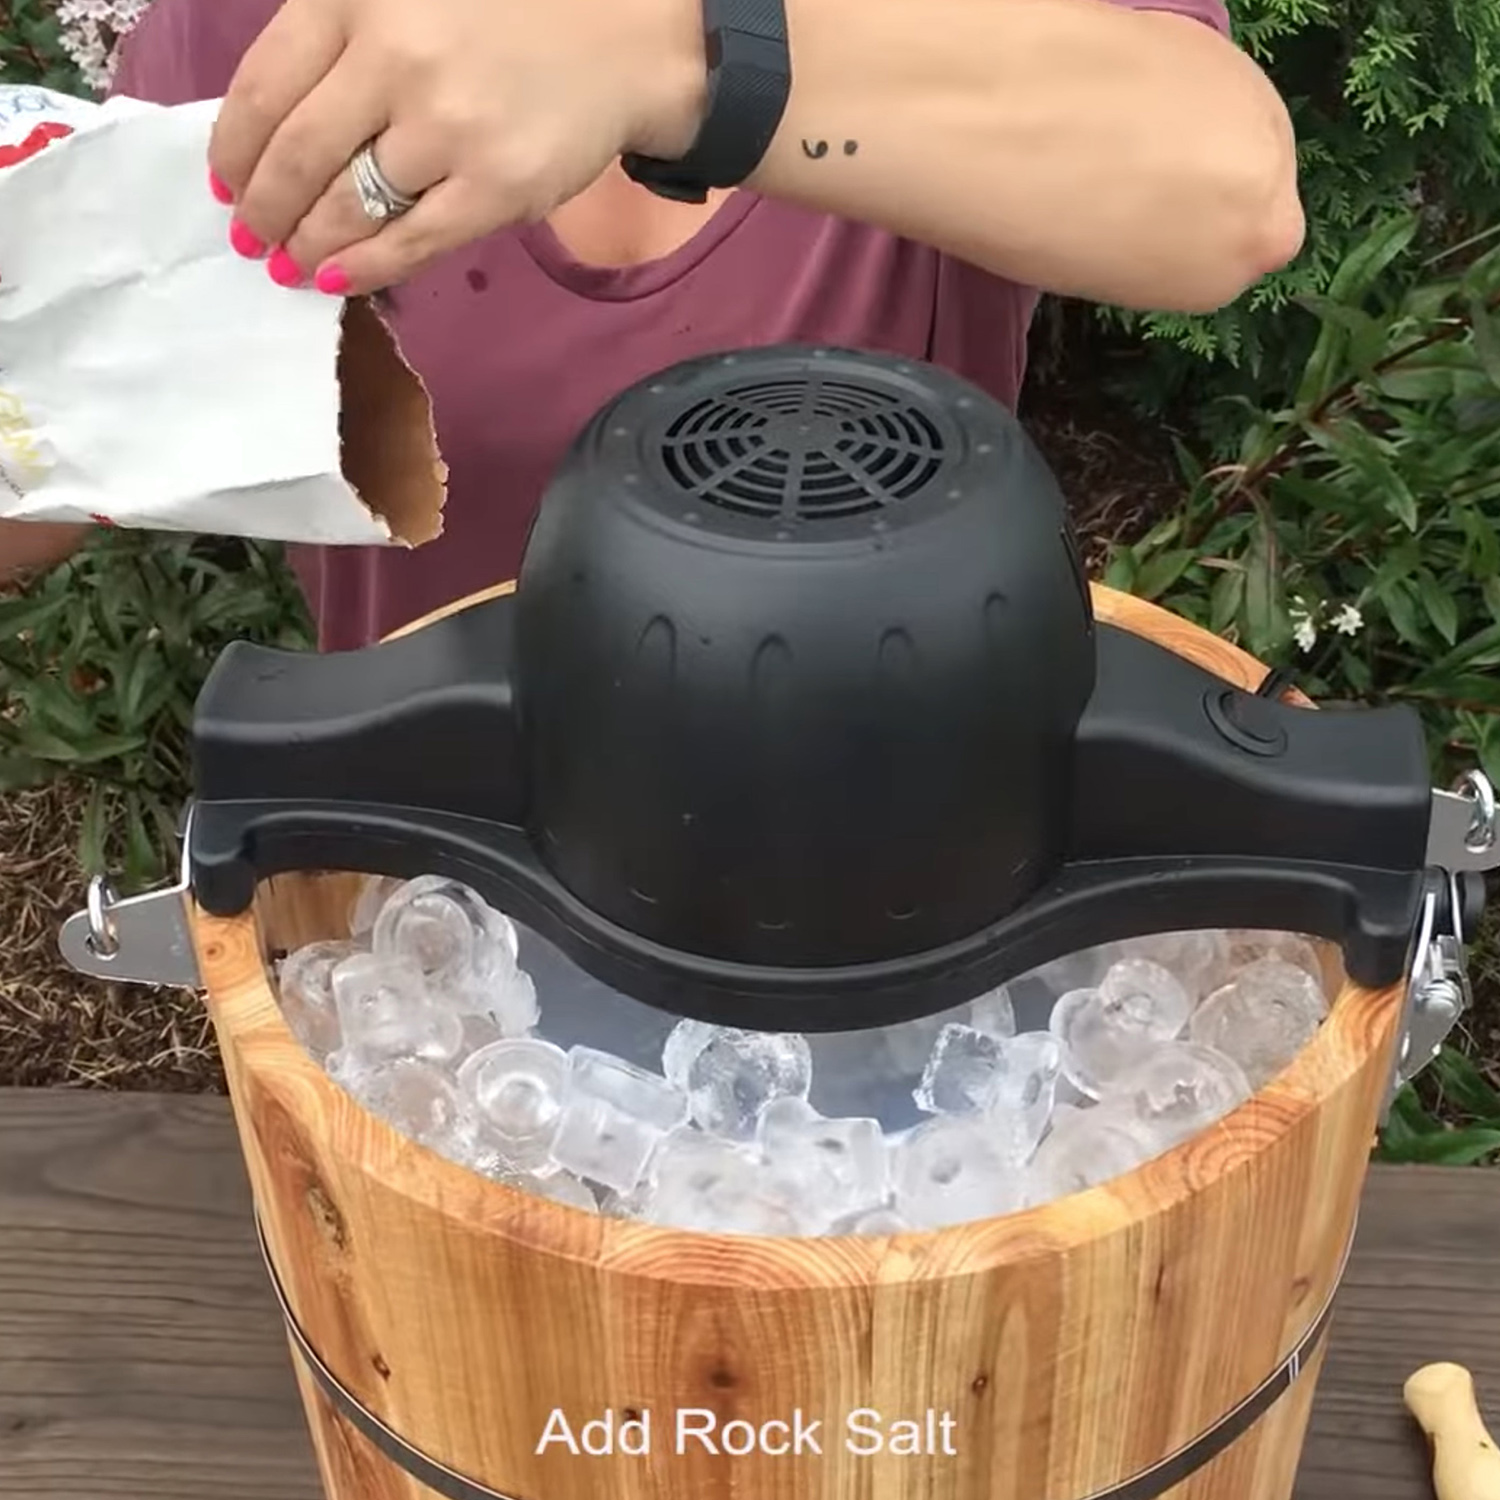 Add rock salt to help freeze the ice cream mixture.